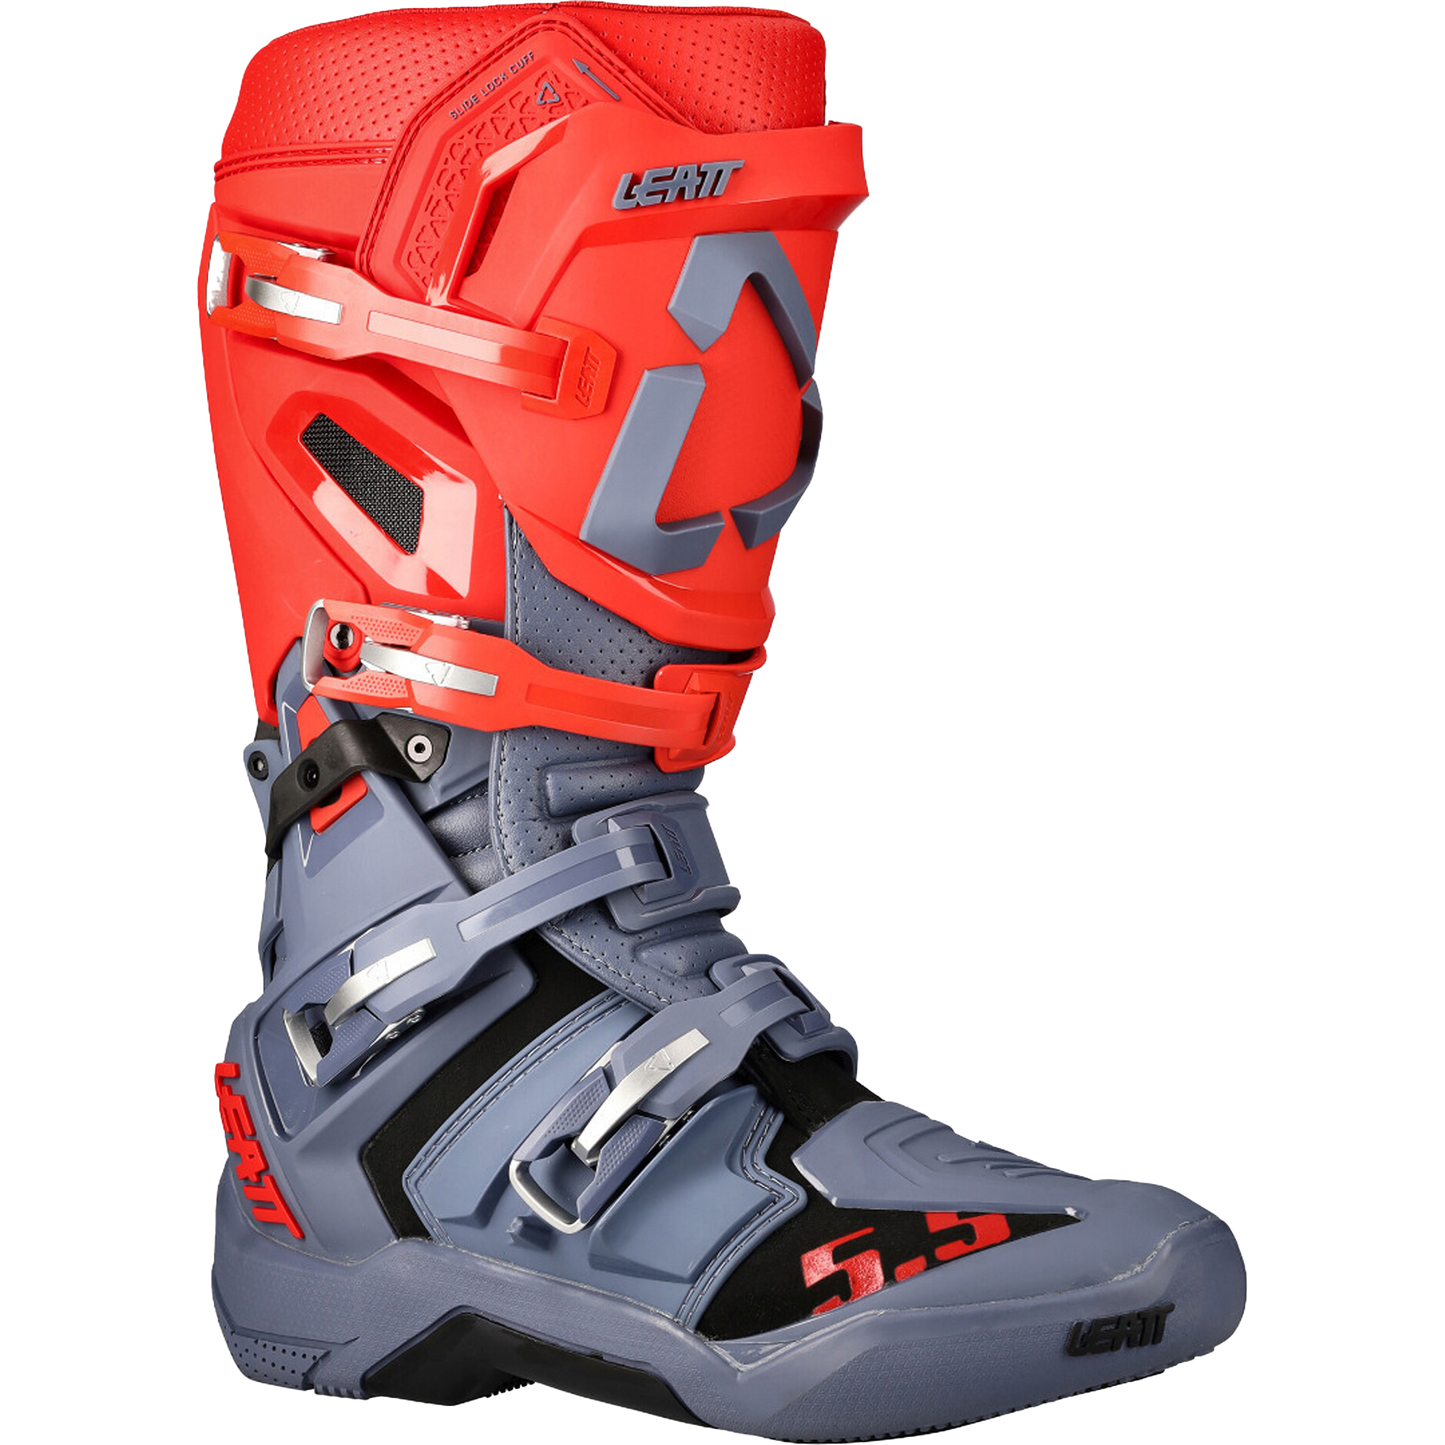 Leatt 5.5 Flexlock Enduro Boots (Red/Grey)